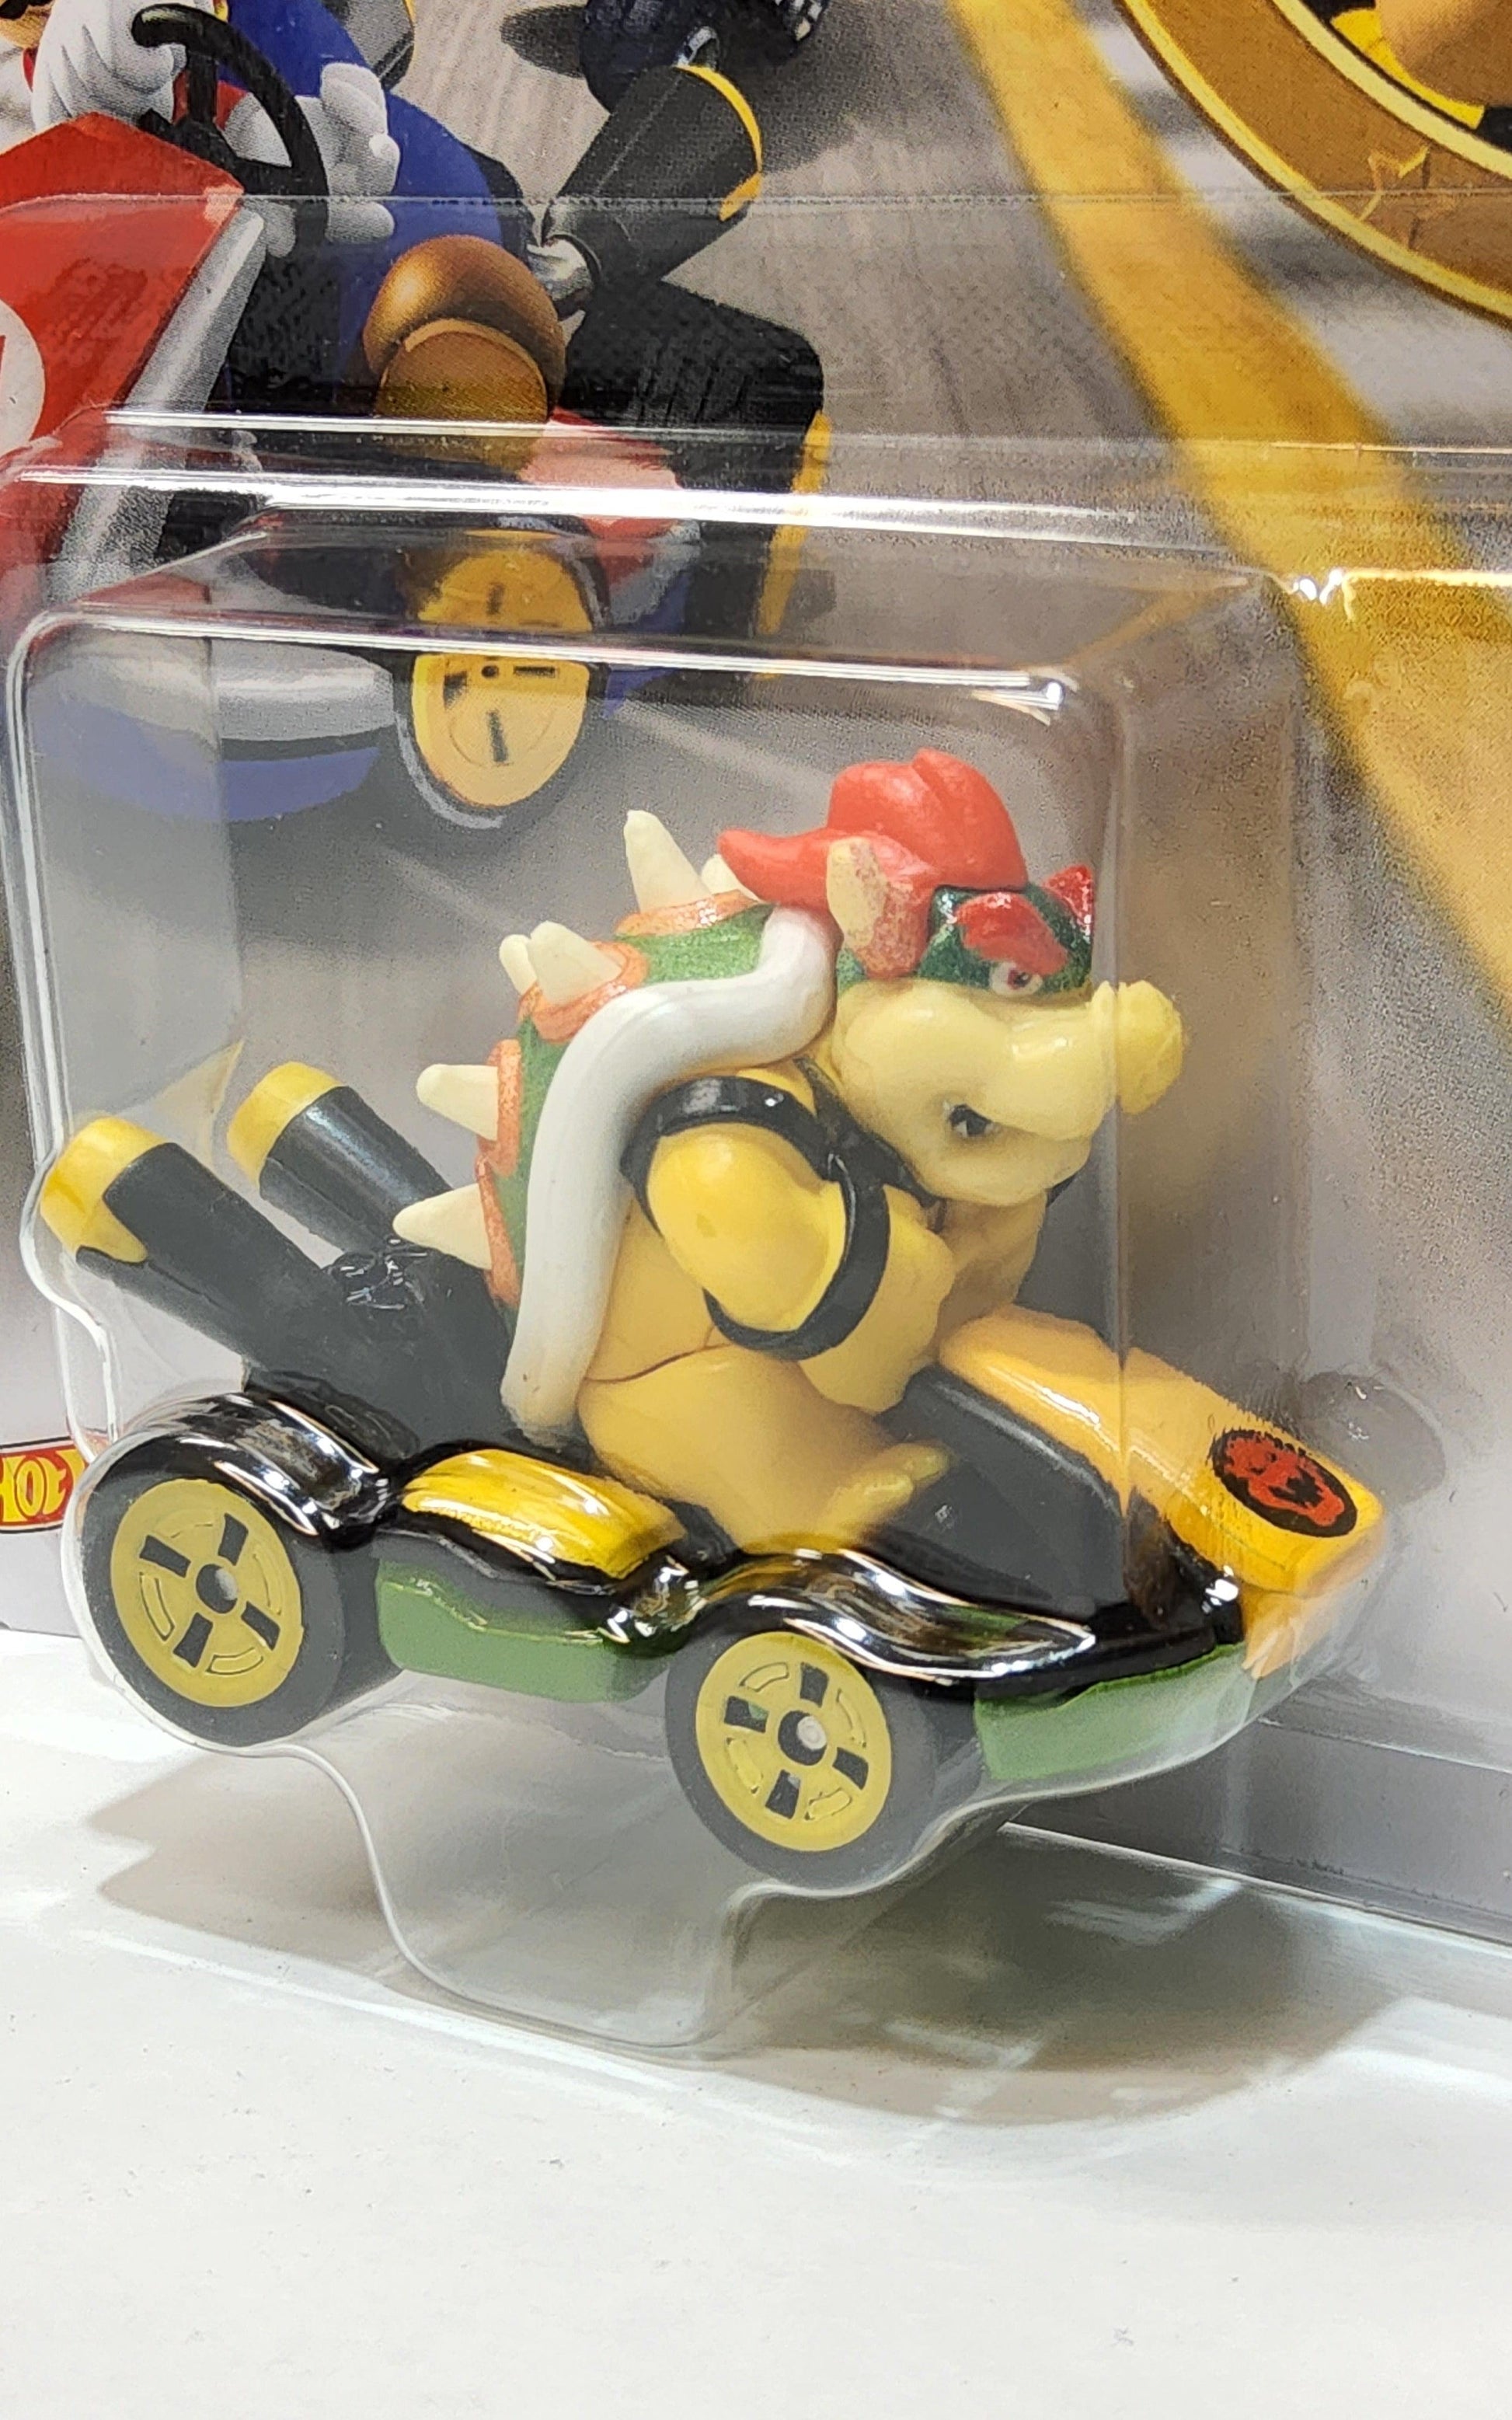 Hot Wheels Mario Kart Mario, Standard Kart Vehicle